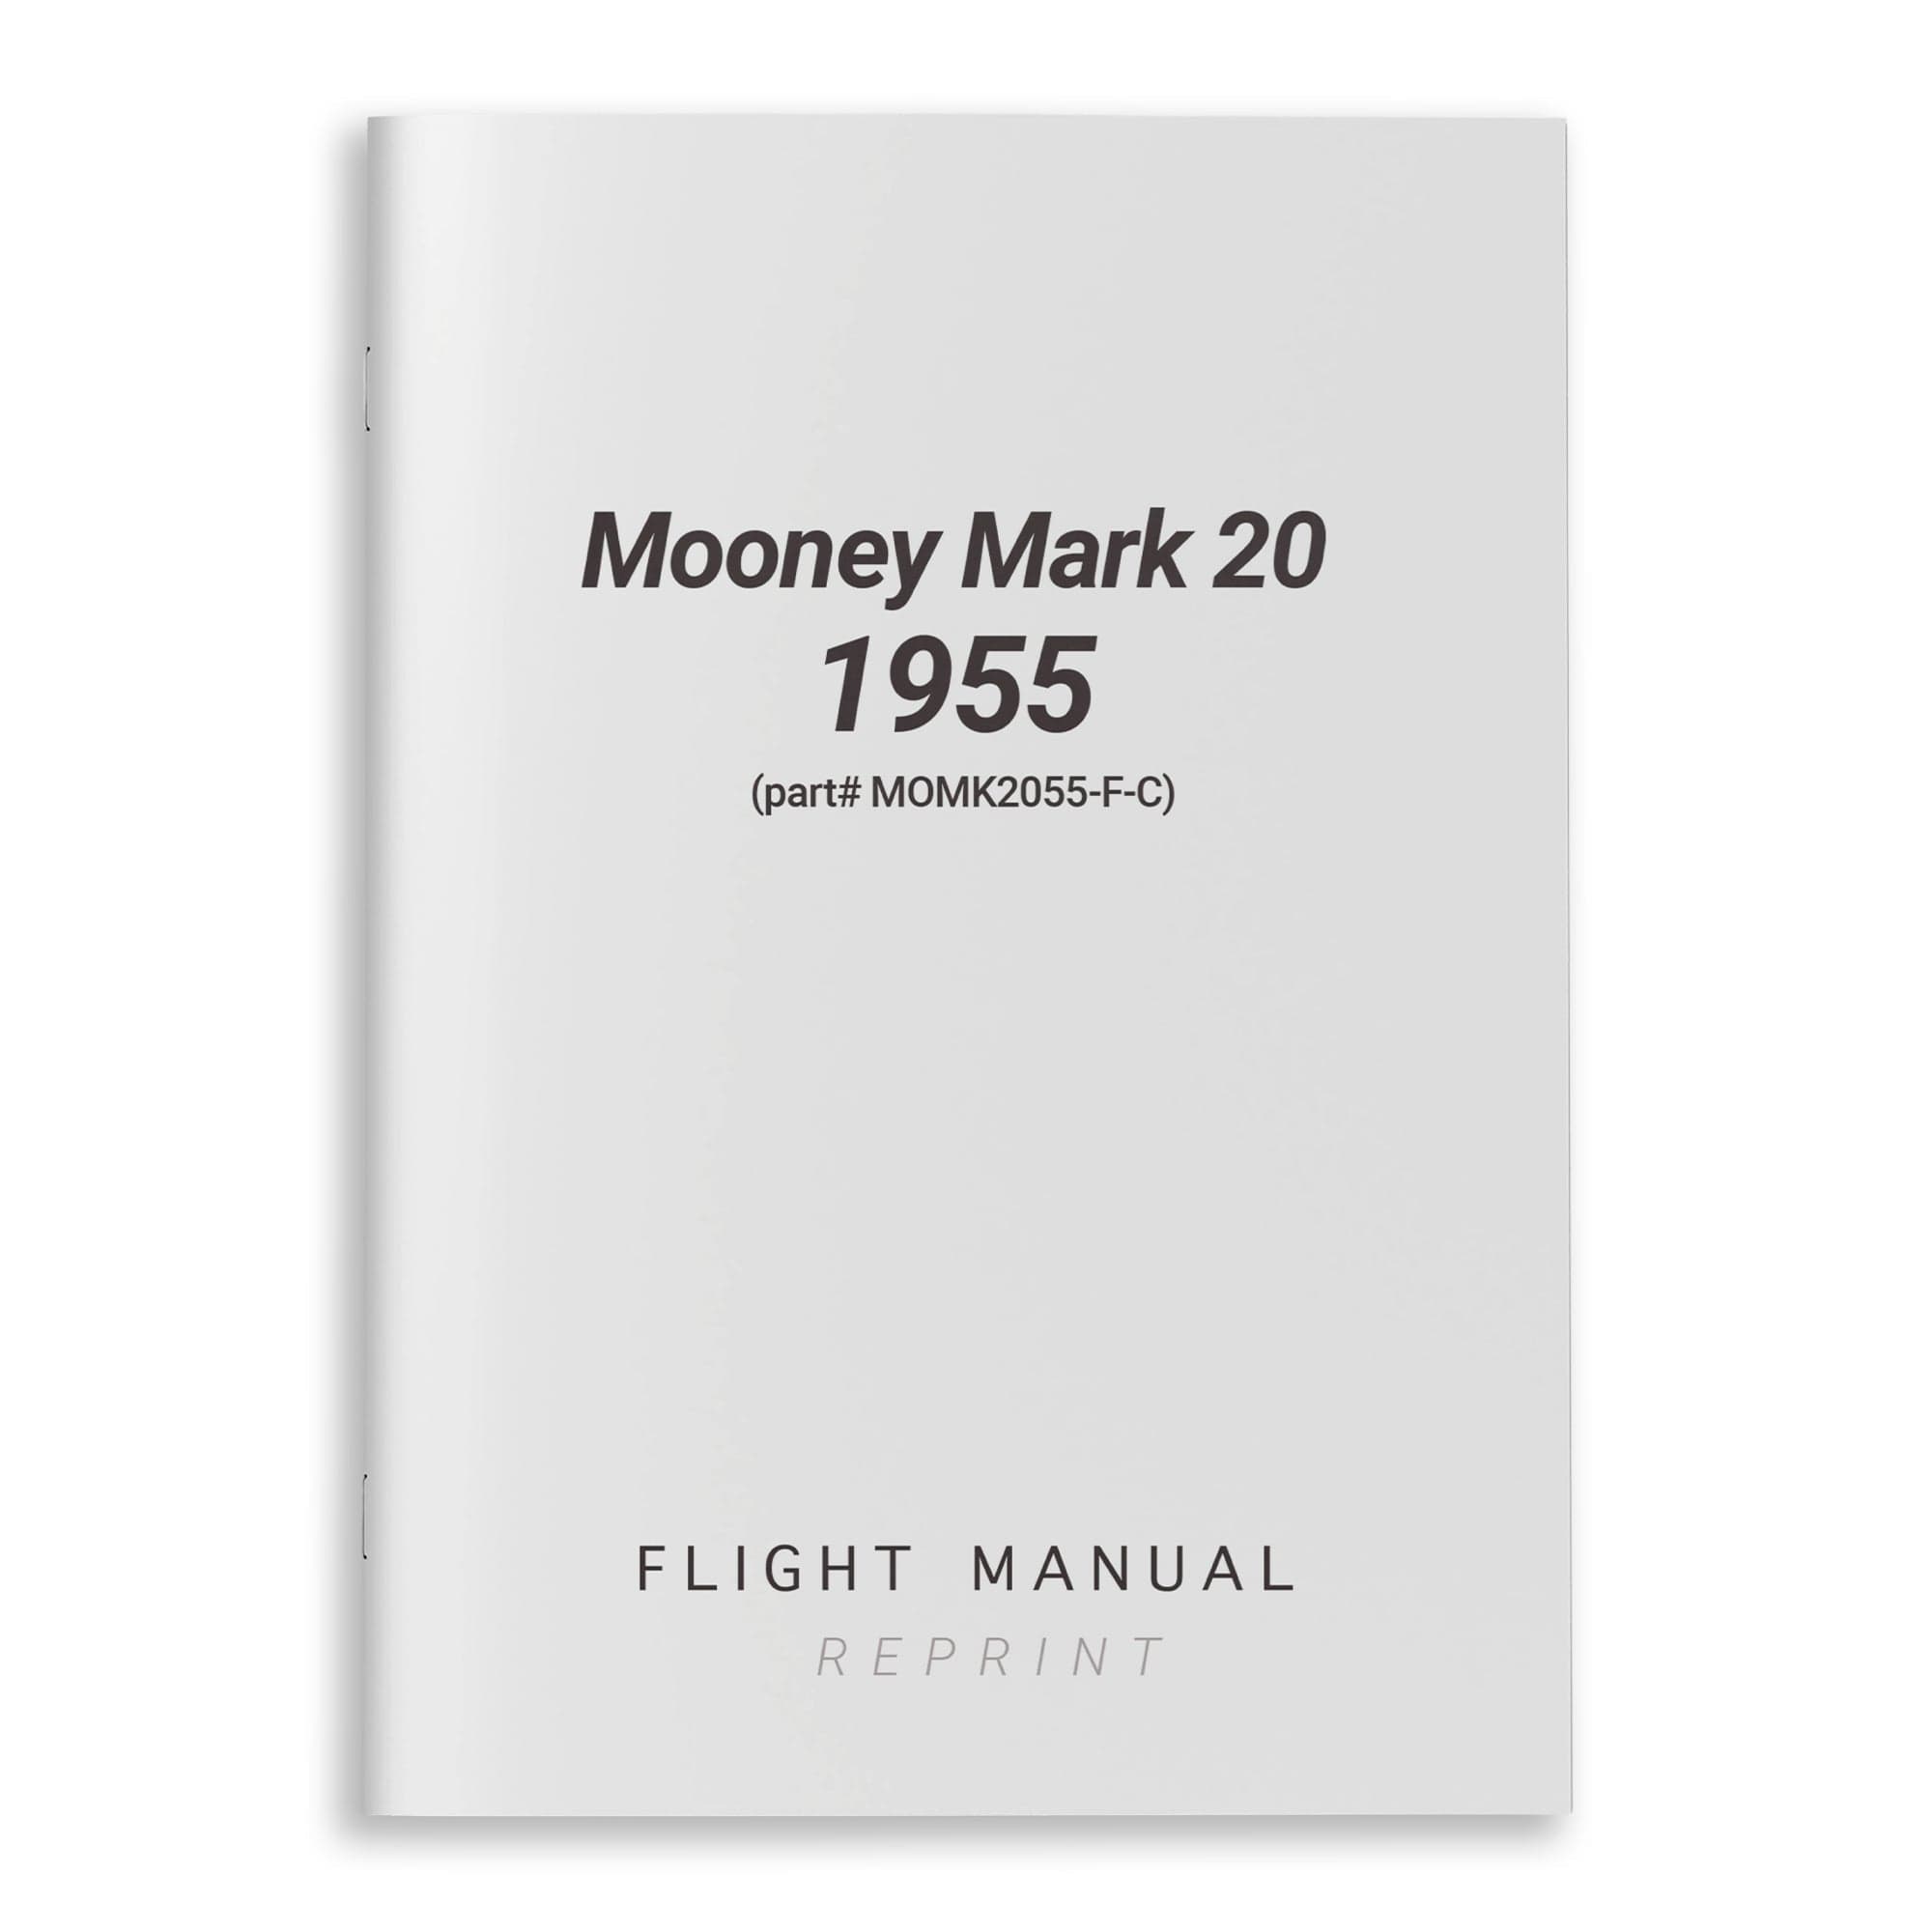 Mooney Mark 20 1955 Flight Manual (part# MOMK2055-F-C) - PilotMall.com